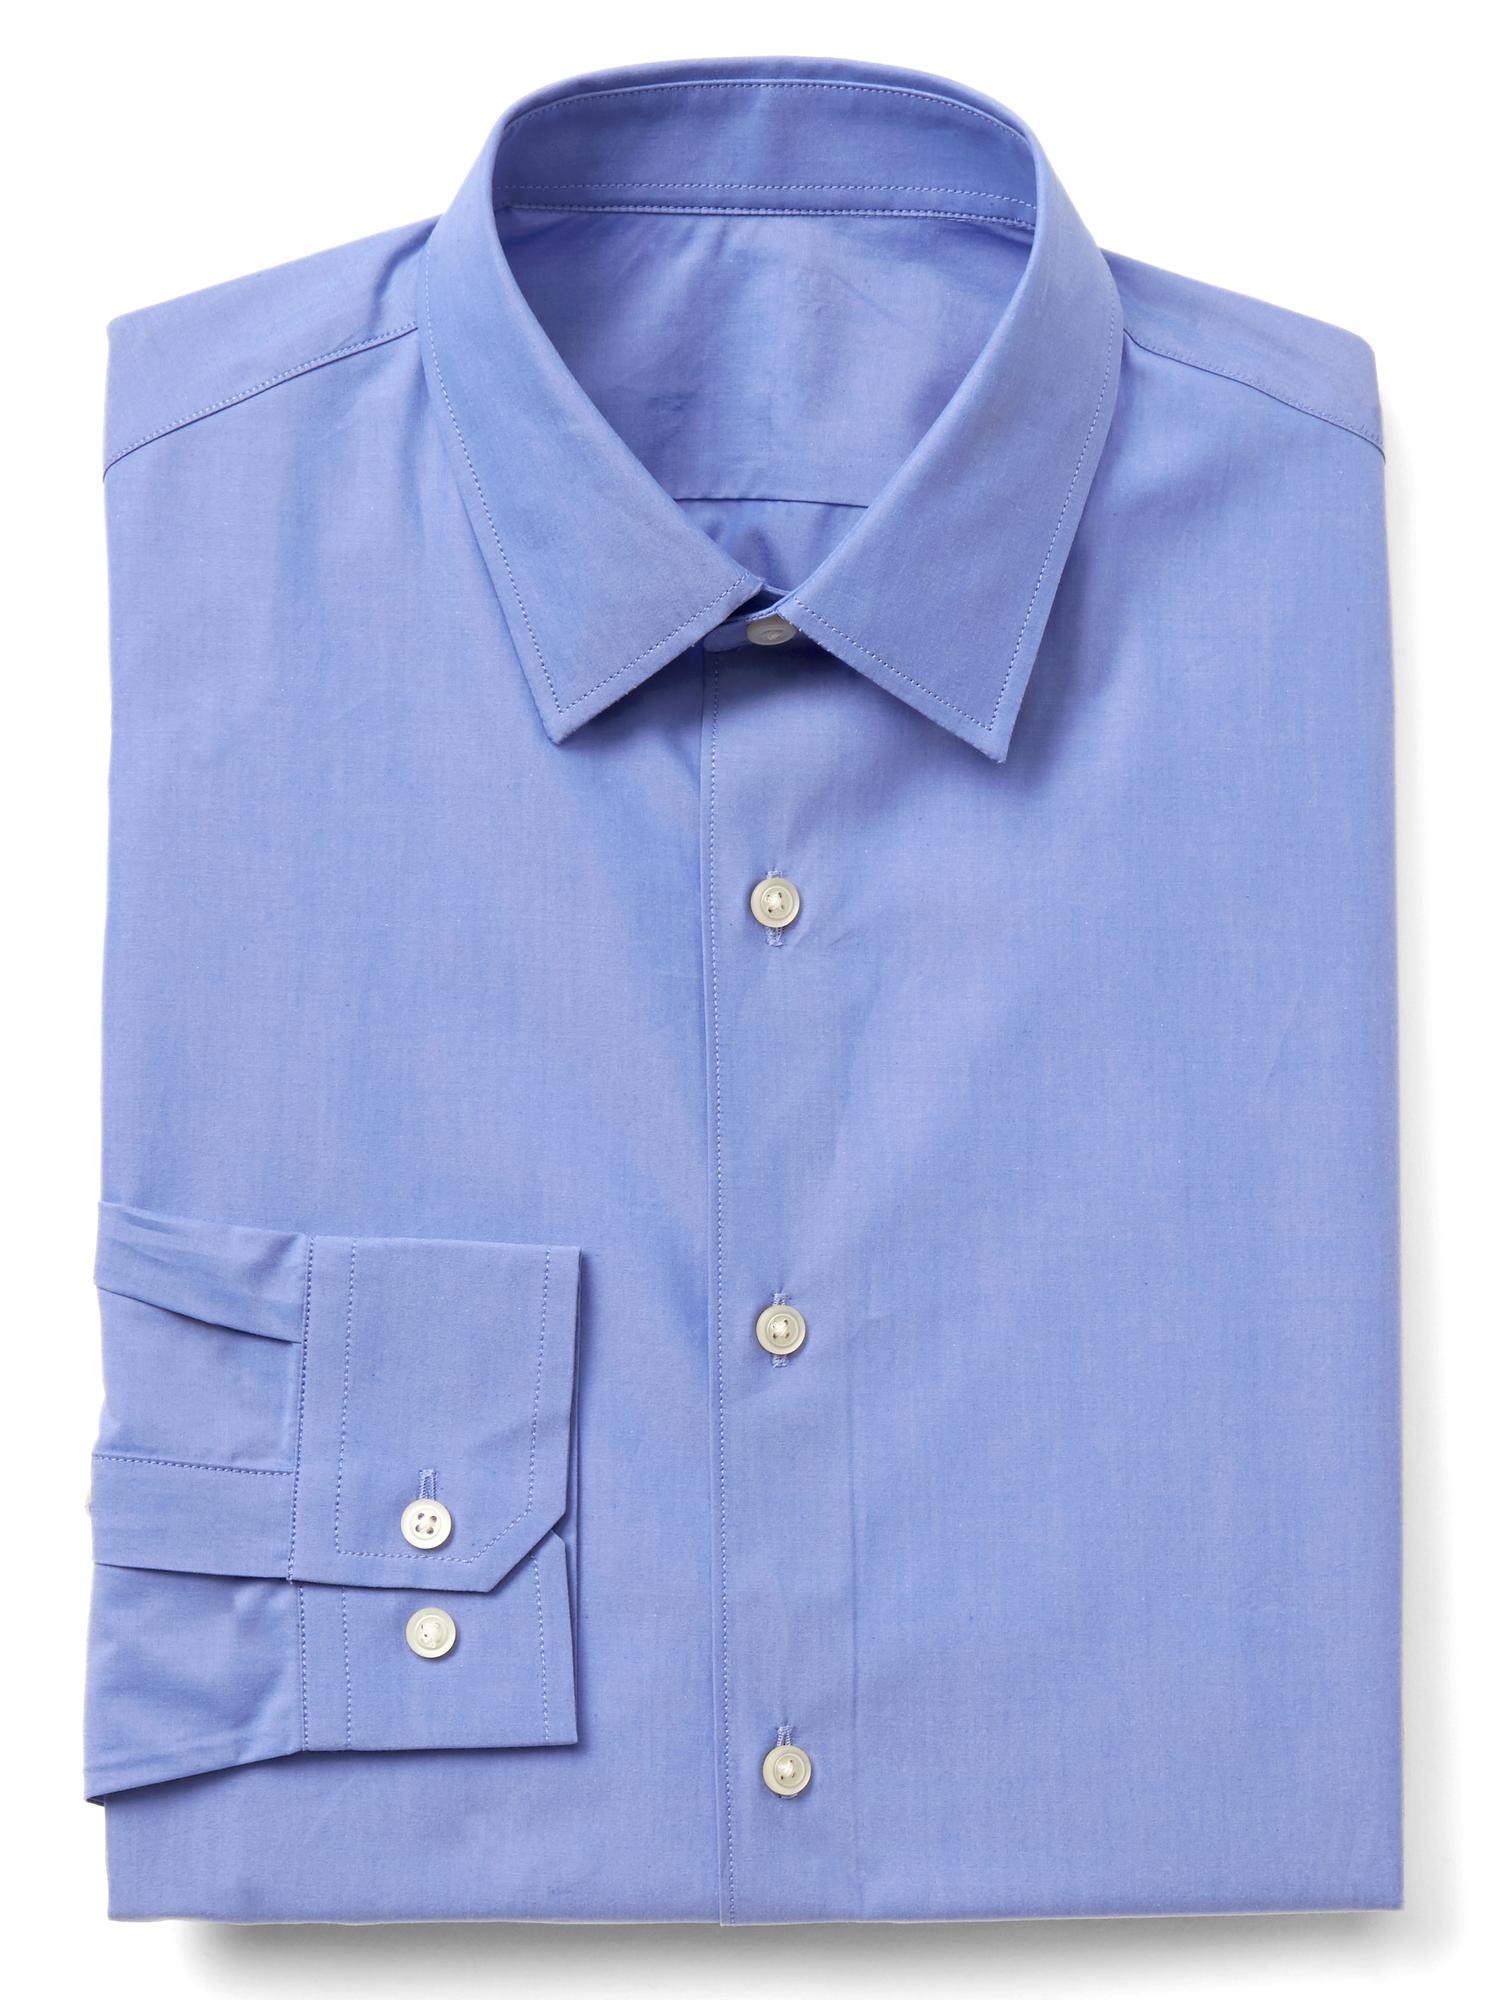 Supima Cotton standard fit shirt | Gap